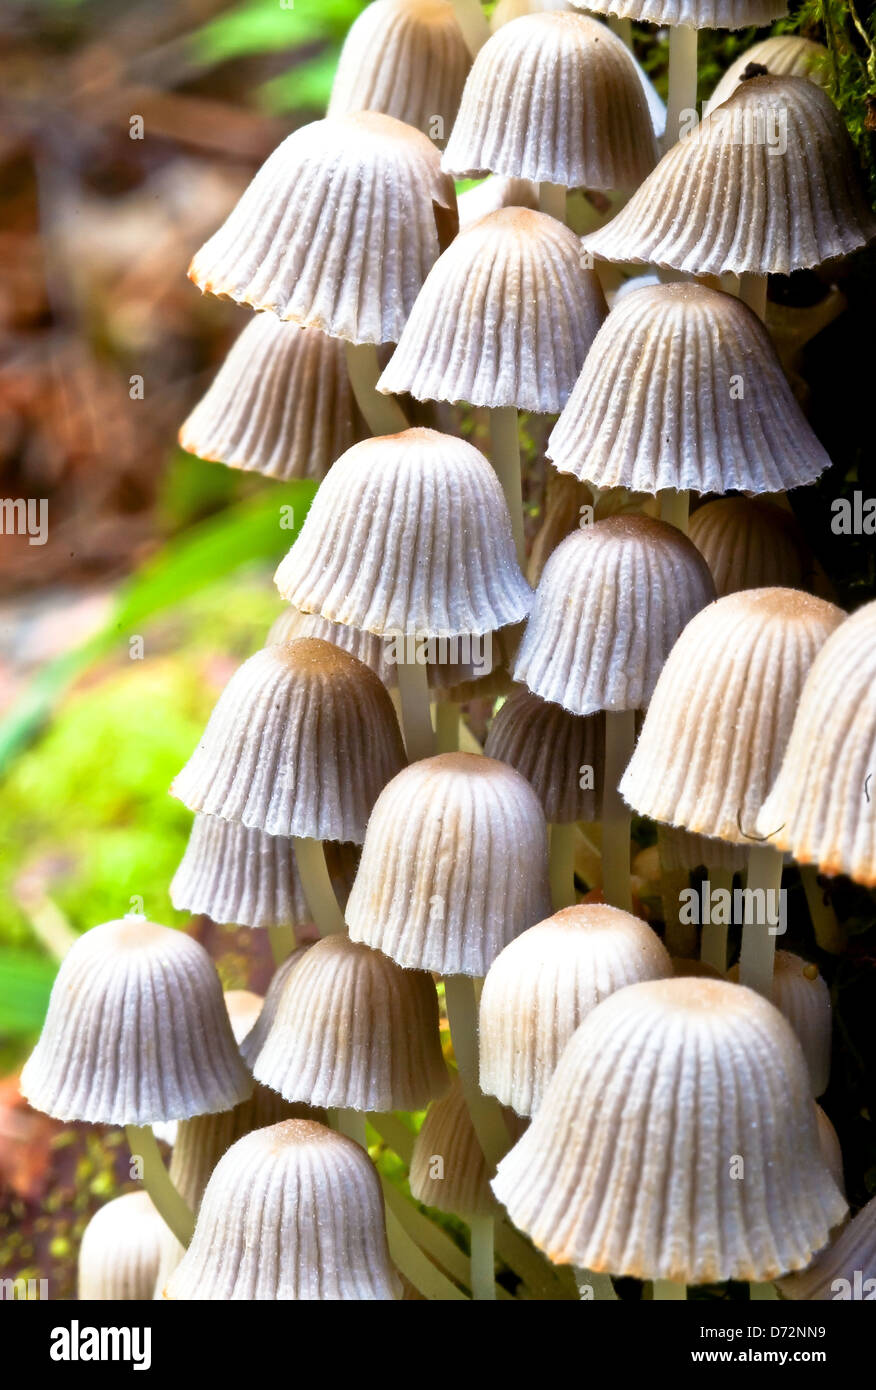 Group of Fairy inkcap mushrooms Stock Photo - Alamy